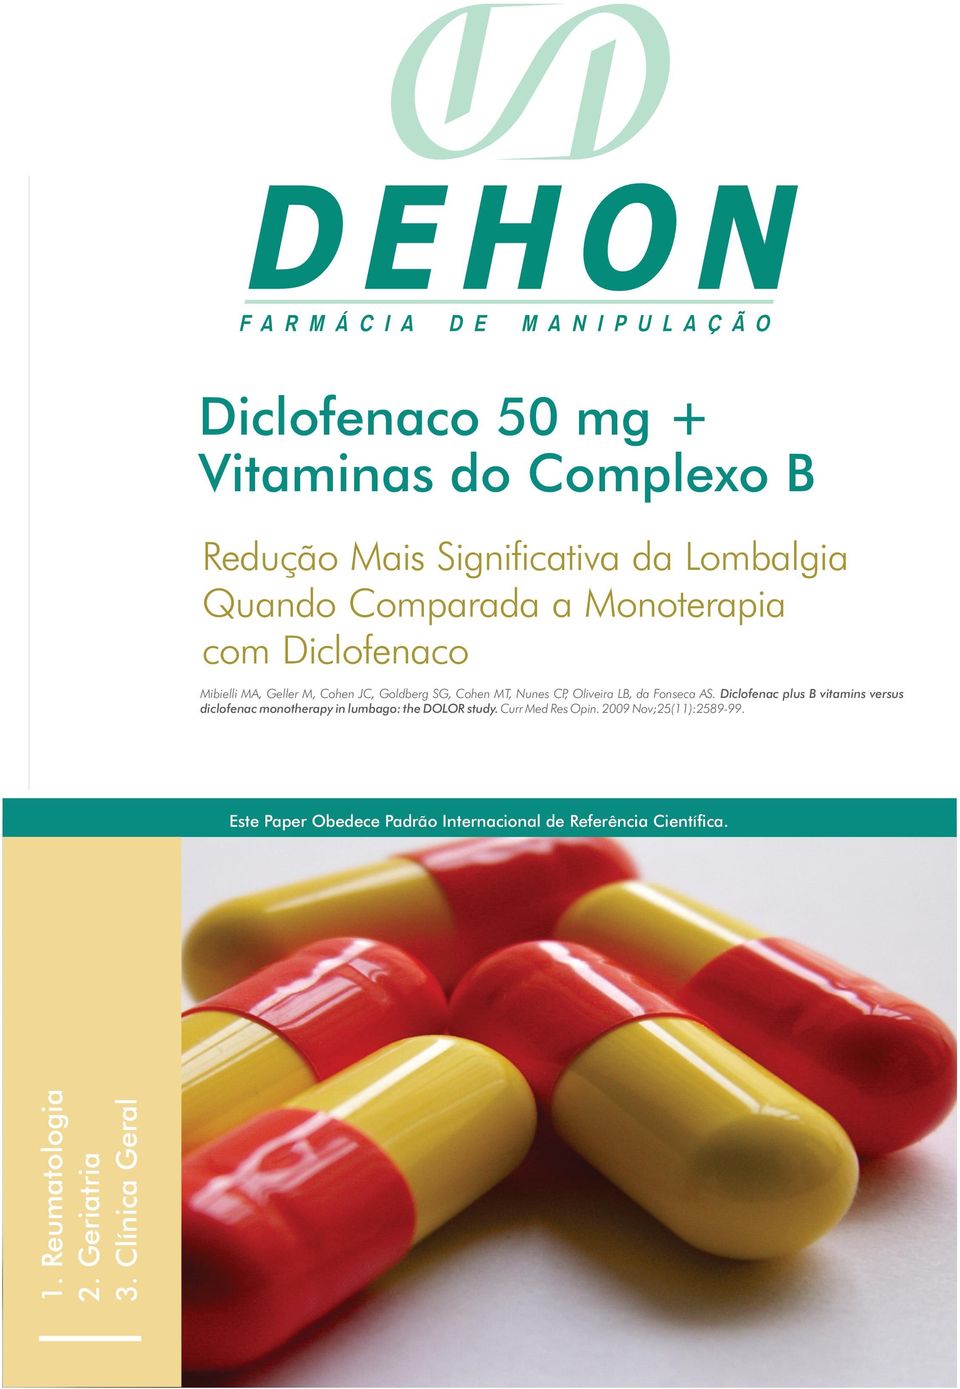 Diclofenac plus B vitamins versus diclofenac monotherapy in lumbago: the DOLOR study. Curr Med Res Opin.